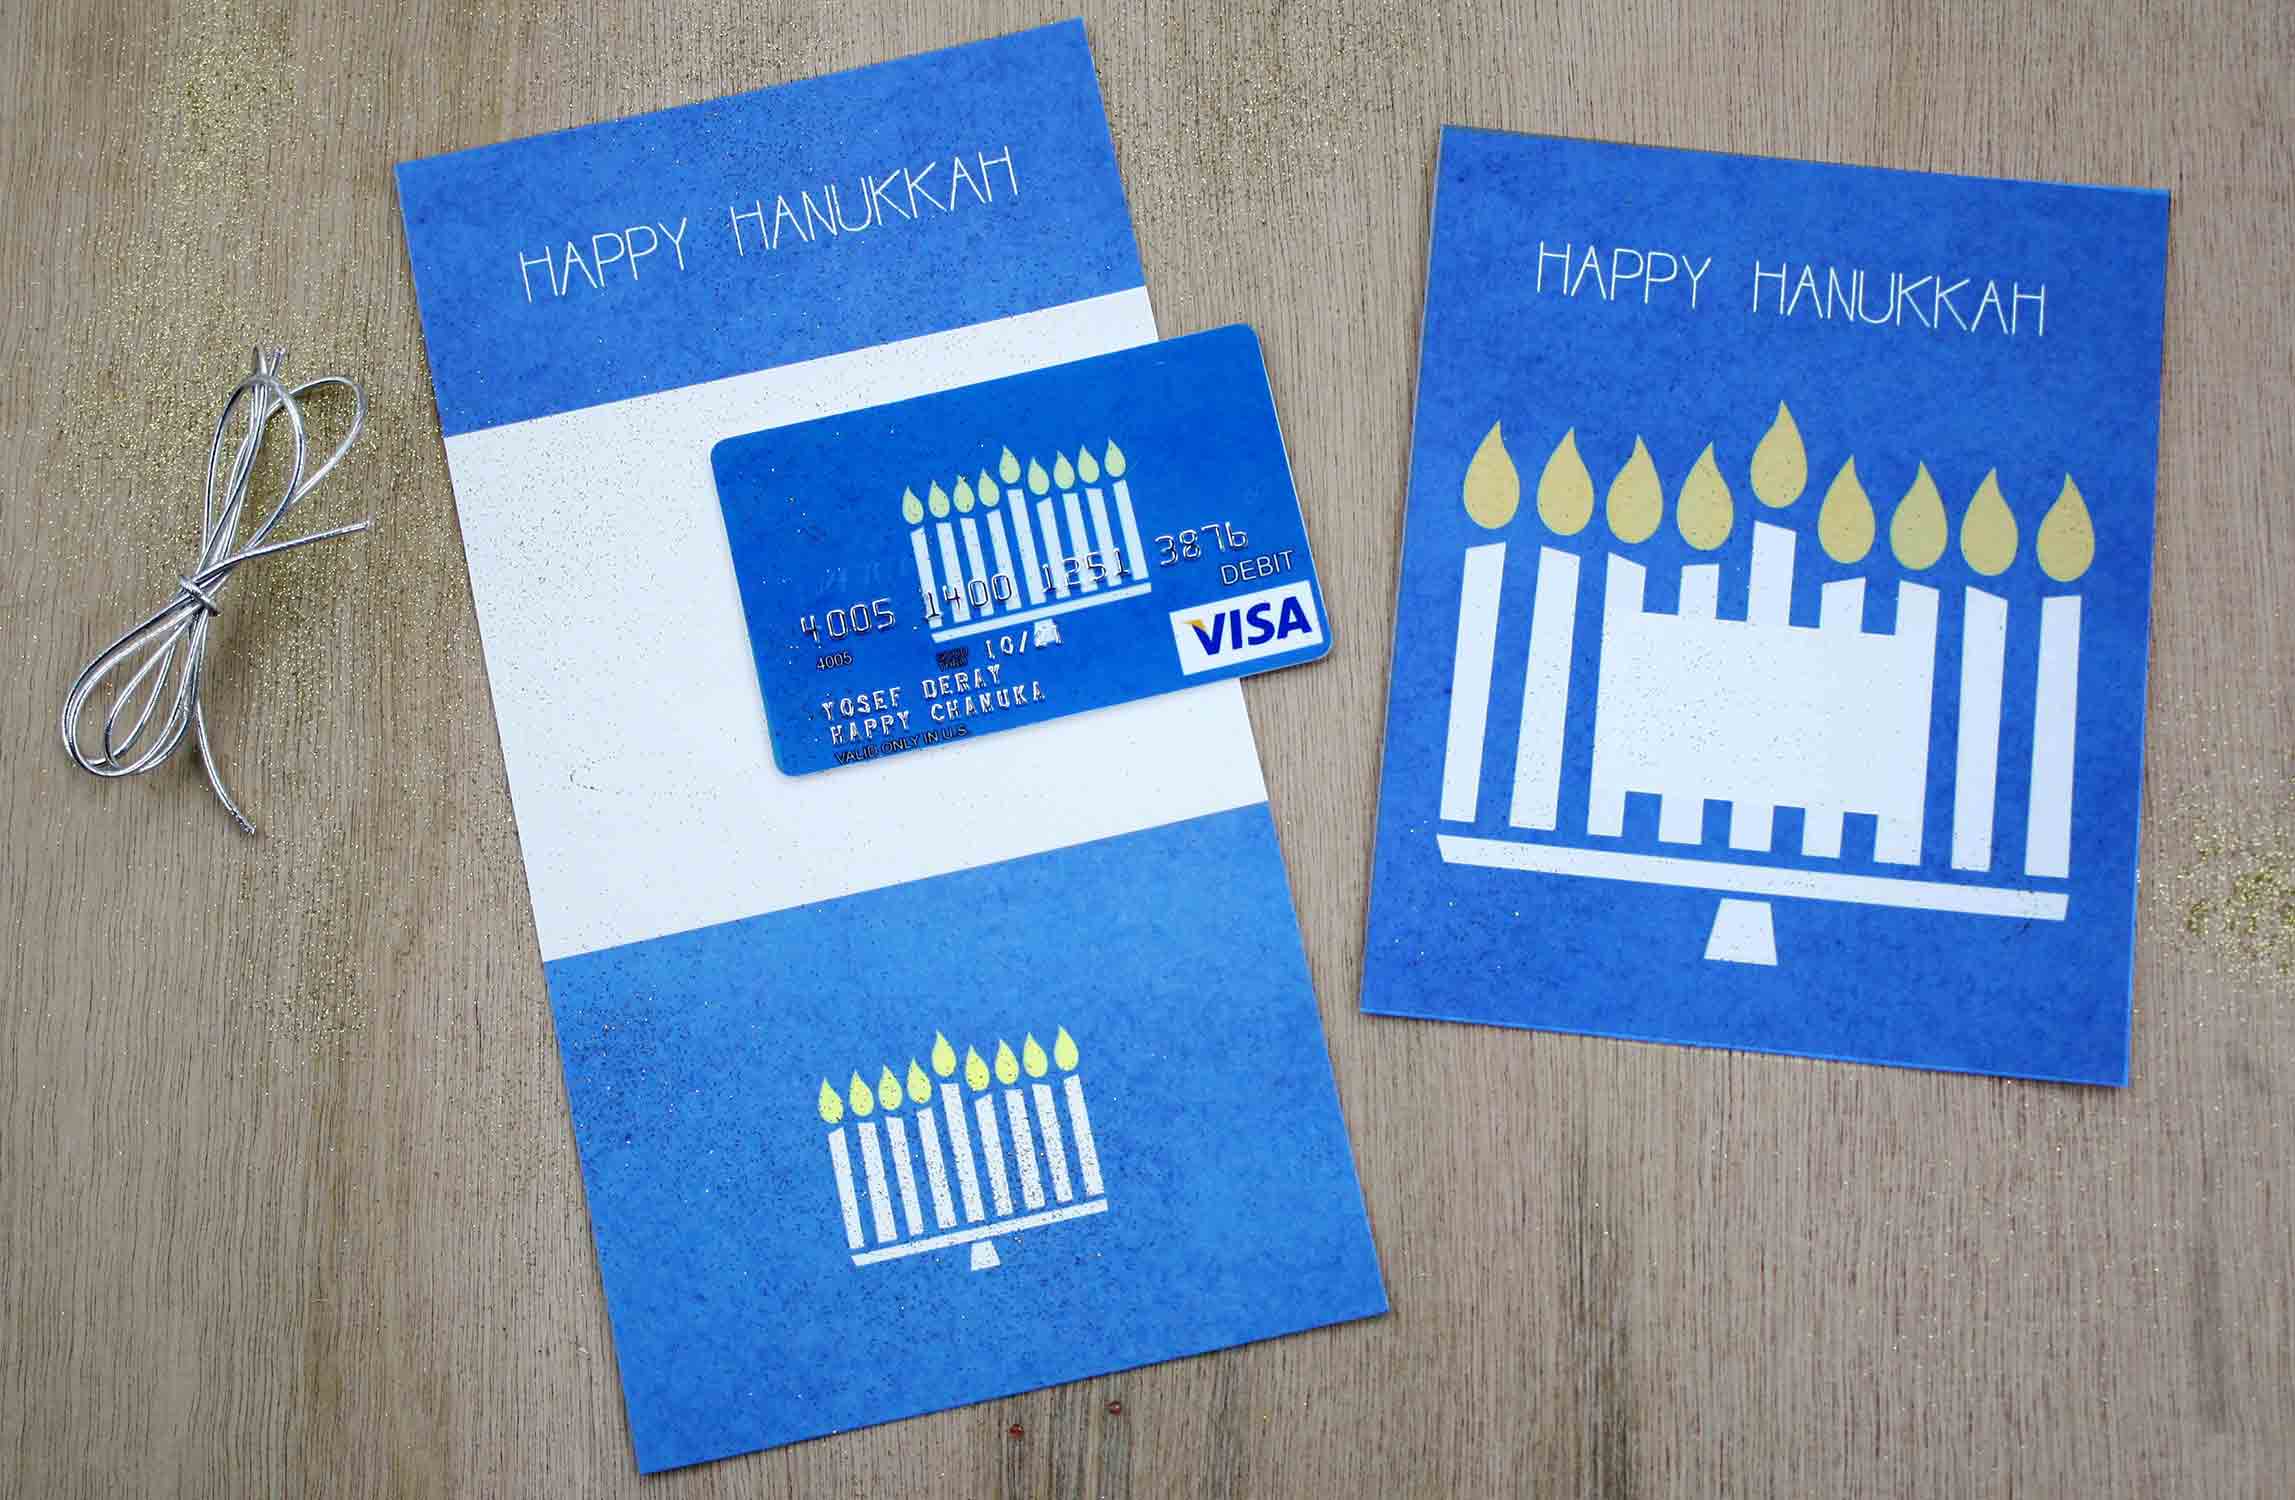 Hanukkah Gift Card/Money Holders 16 Total Cards in 2 Packs of 8   X887 